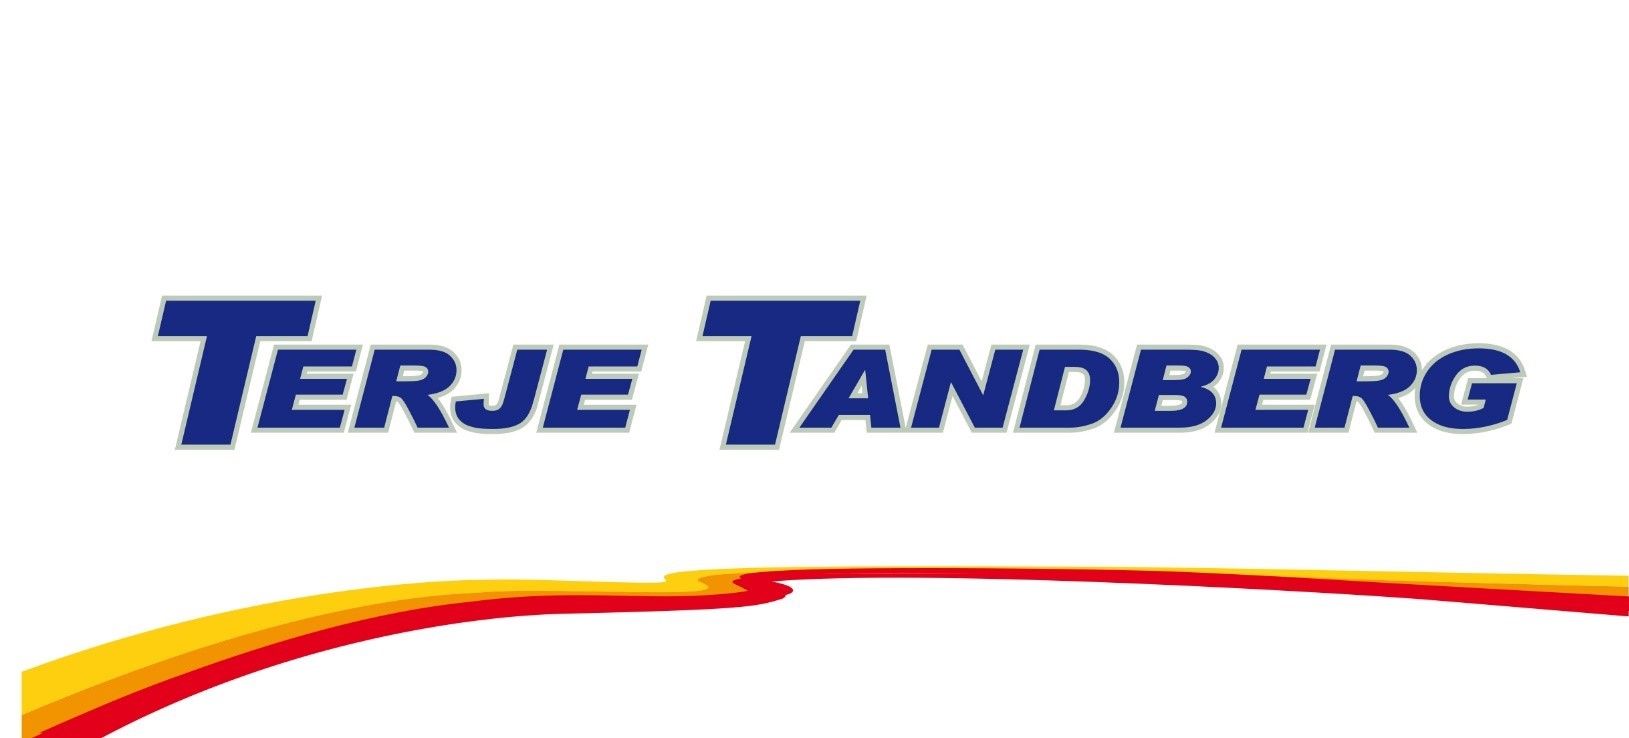 Tandberg